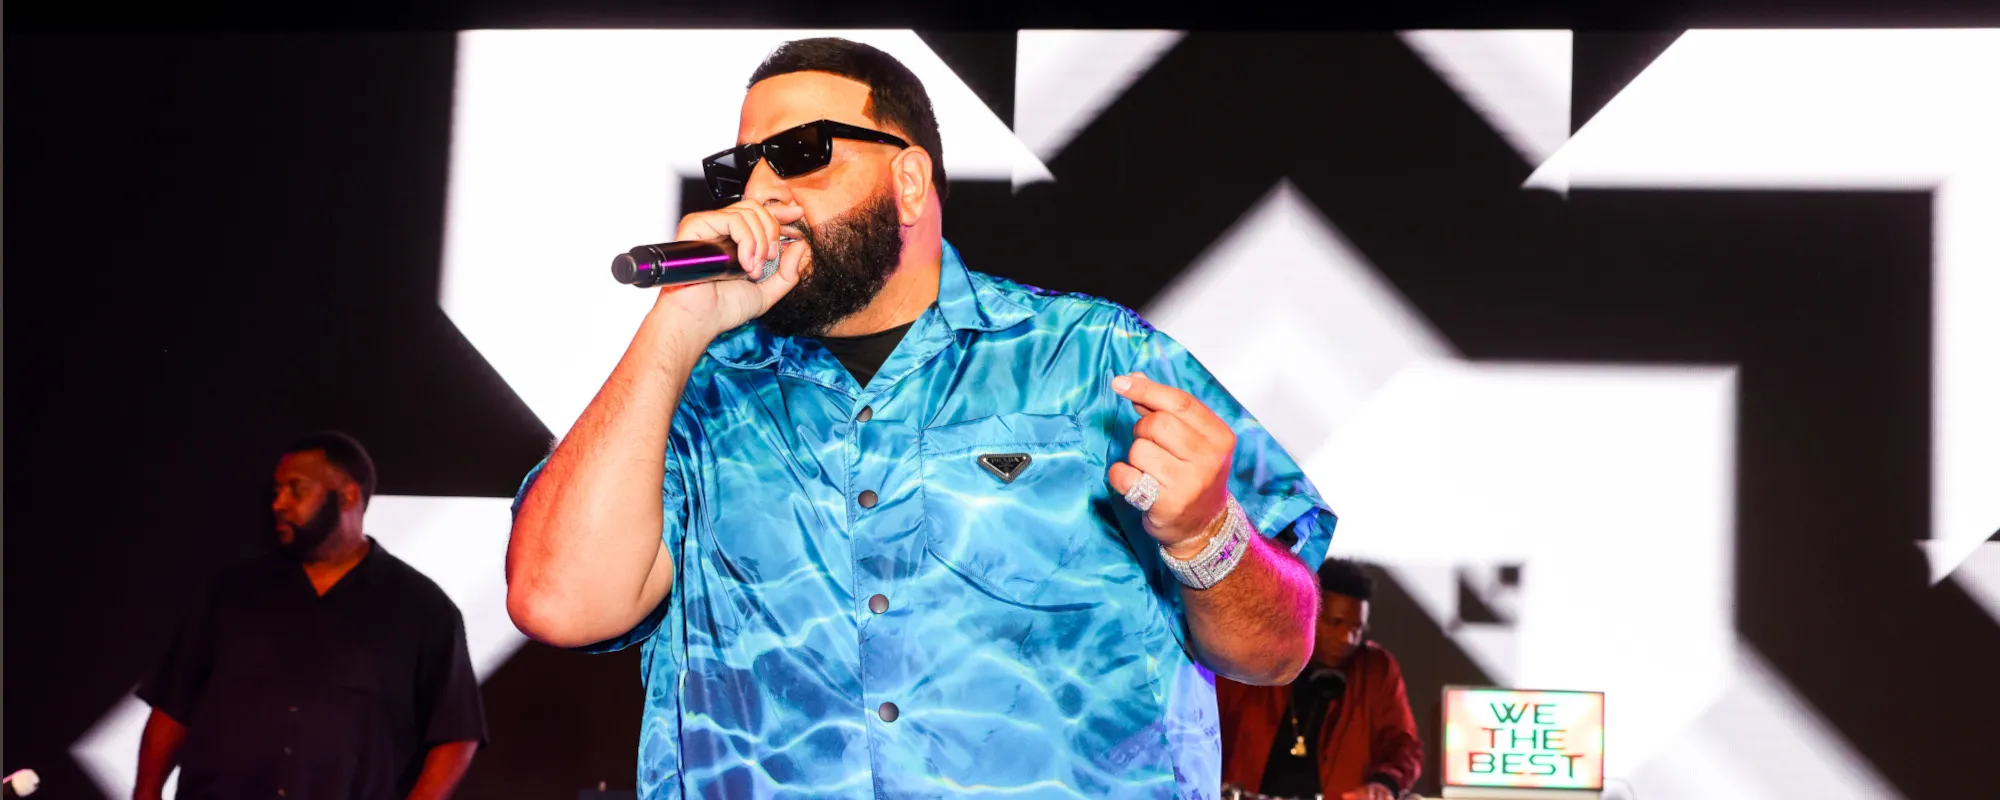 DJ Khaled Announces New Album, Drops Lead Single with Future, Lil Baby, Lil Uzi Vert